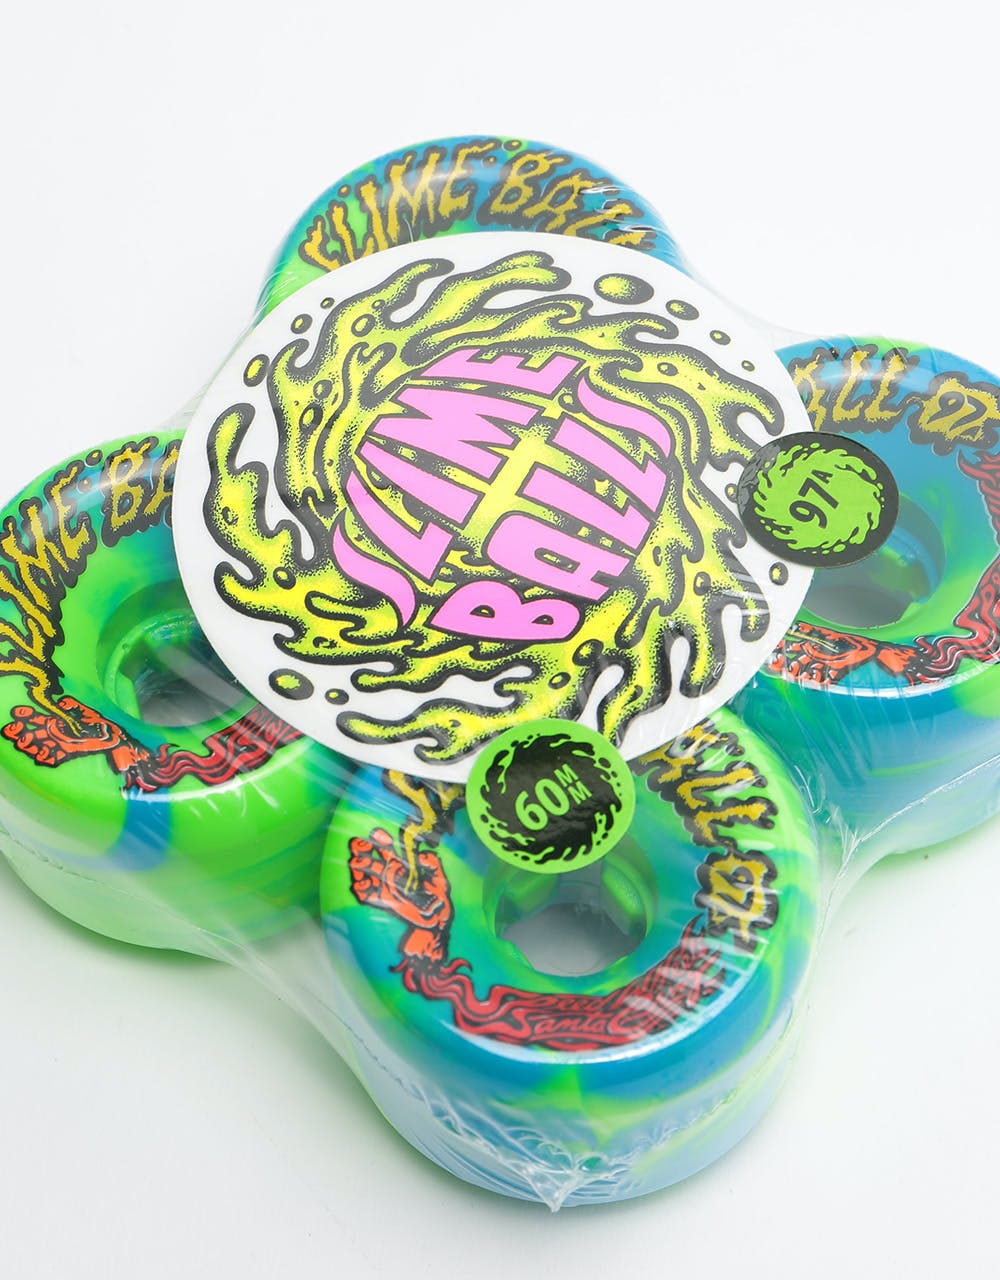 Santa Cruz Slime Balls Vomits Swirl 97a Skateboard Wheel - 60mm